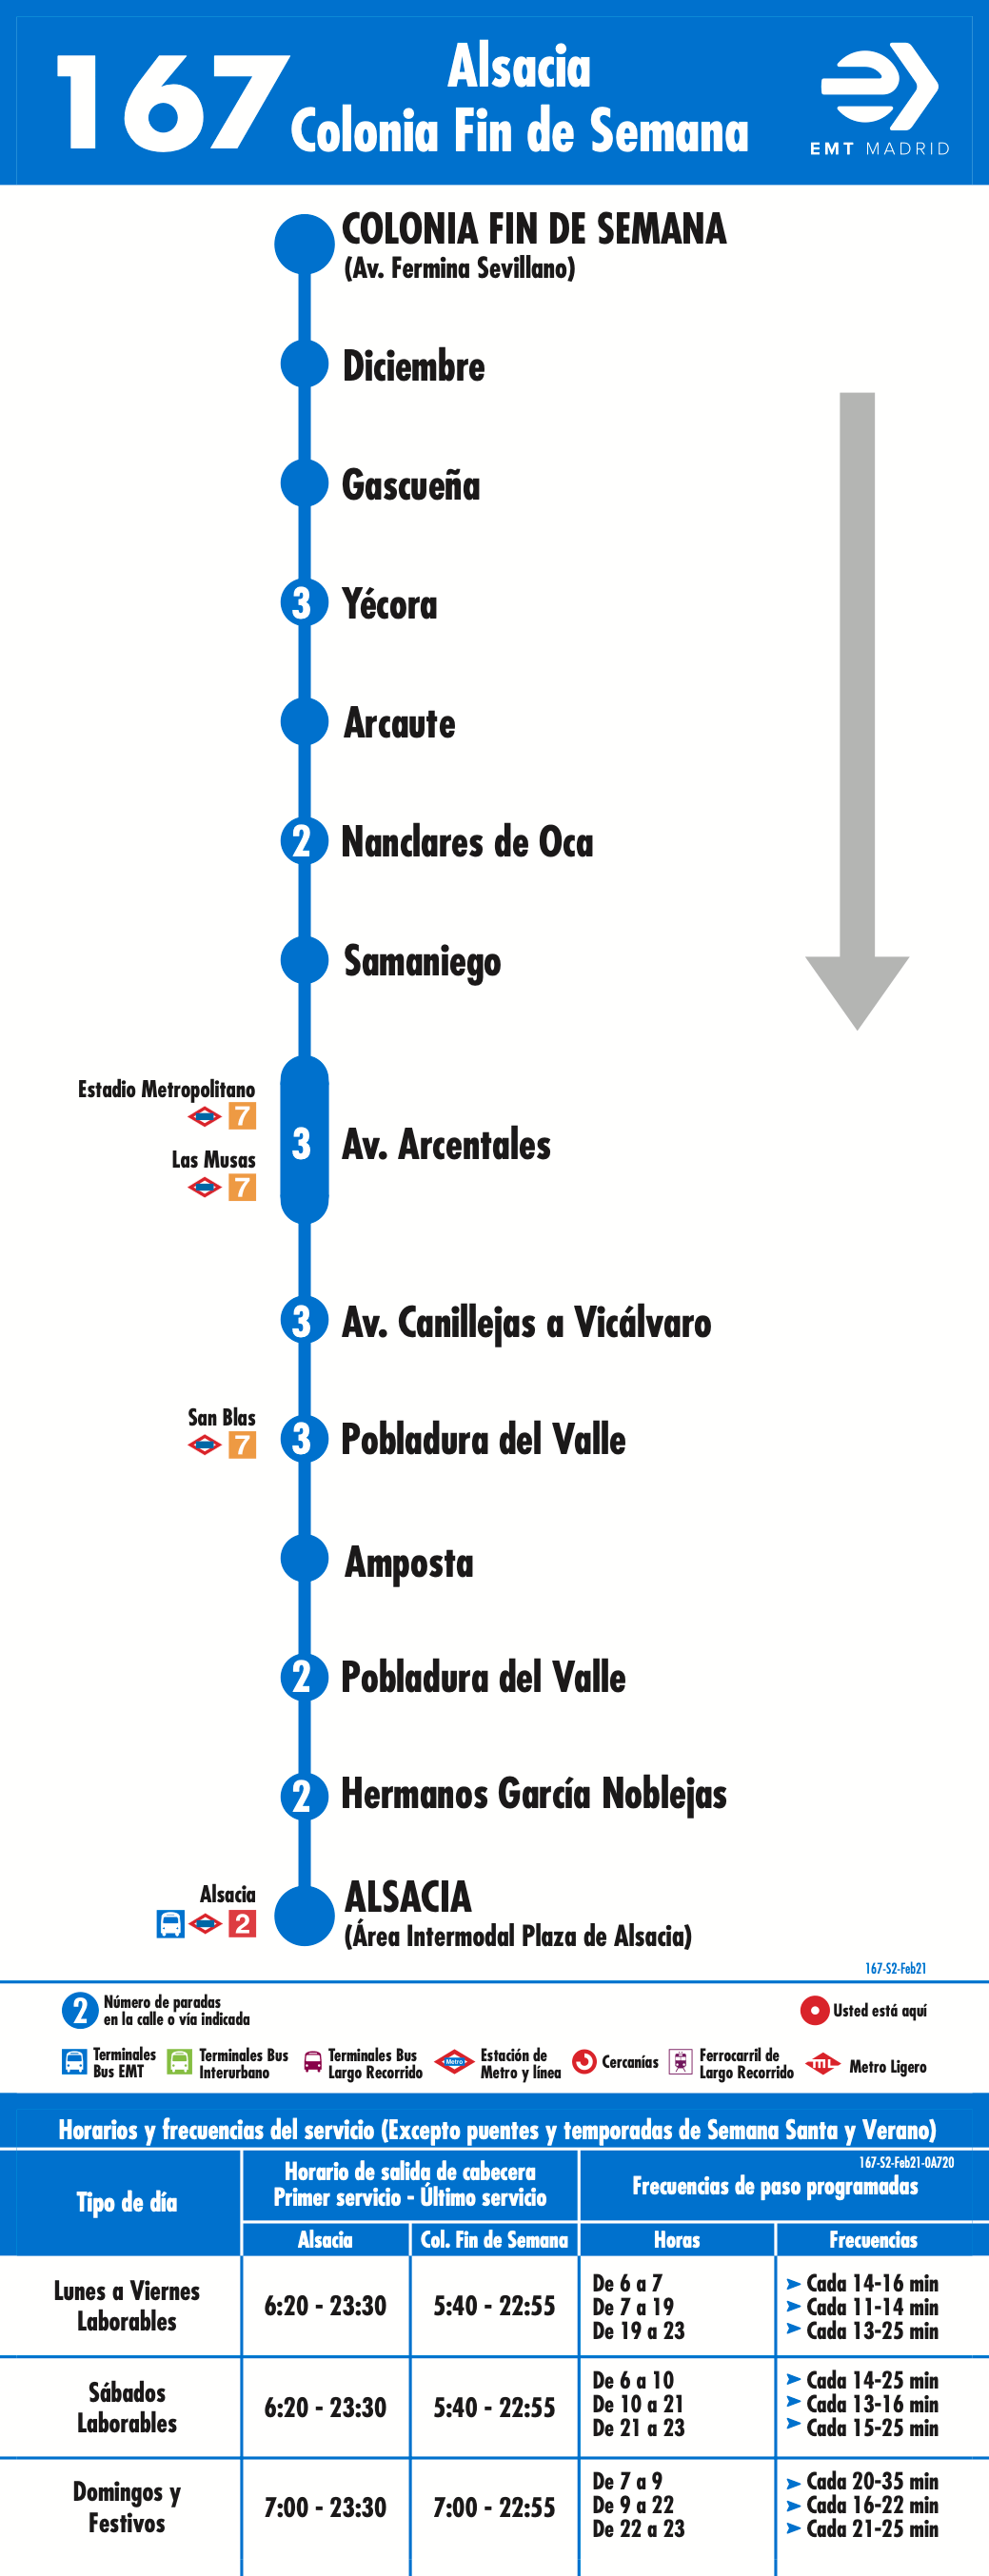 EMT Madrid. Empresa Municipal de Transportes de Madrid, S. A. - My route